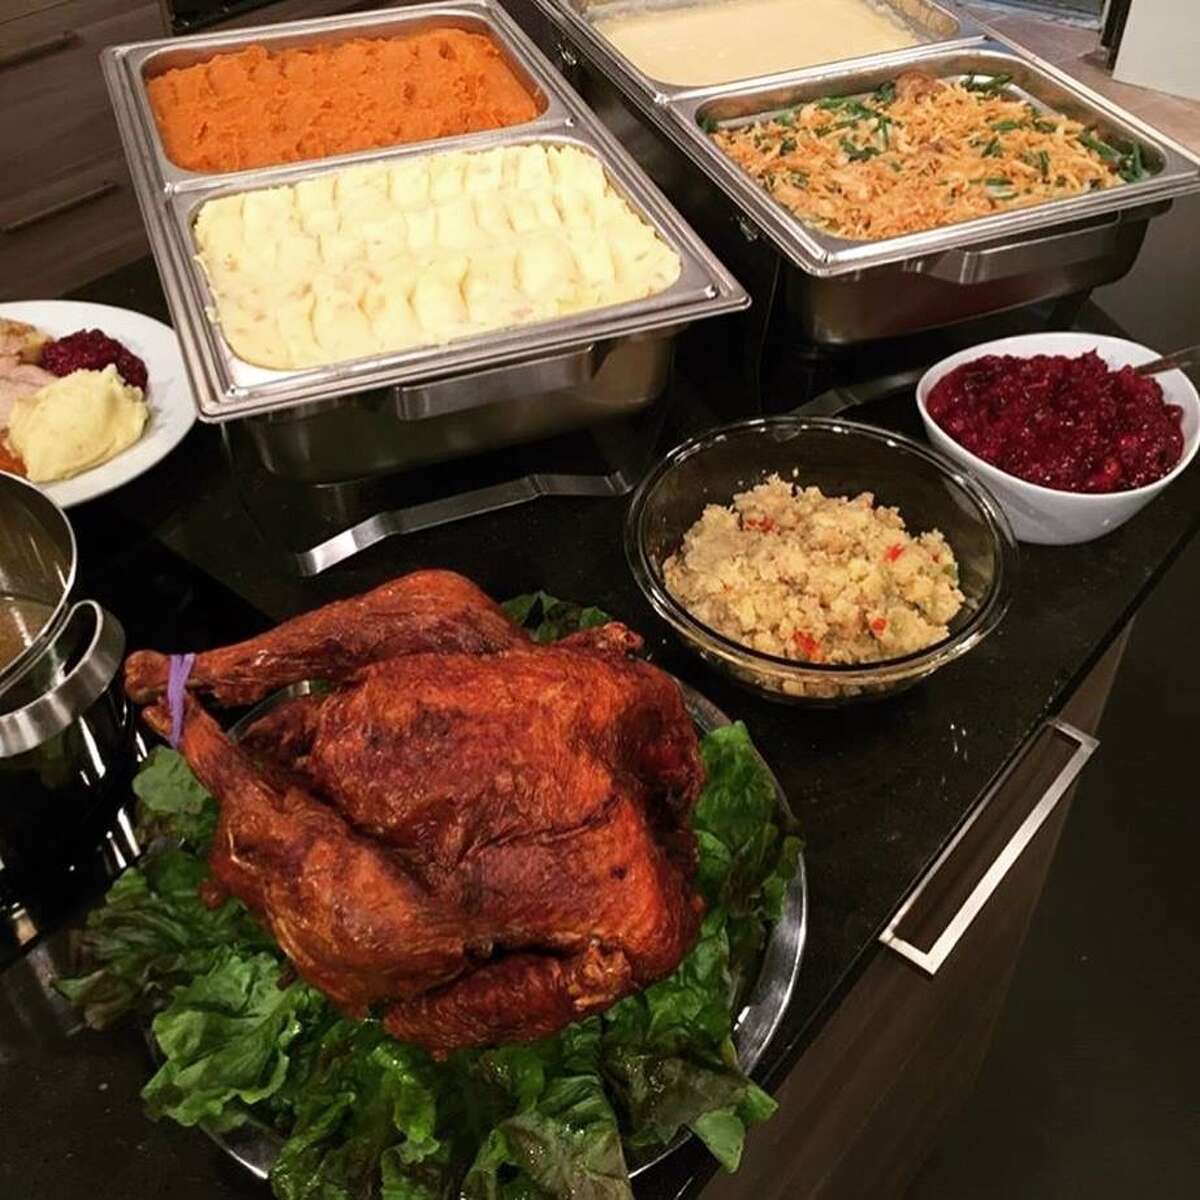 Houston restaurants open for dinein, togo Thanksgiving meals